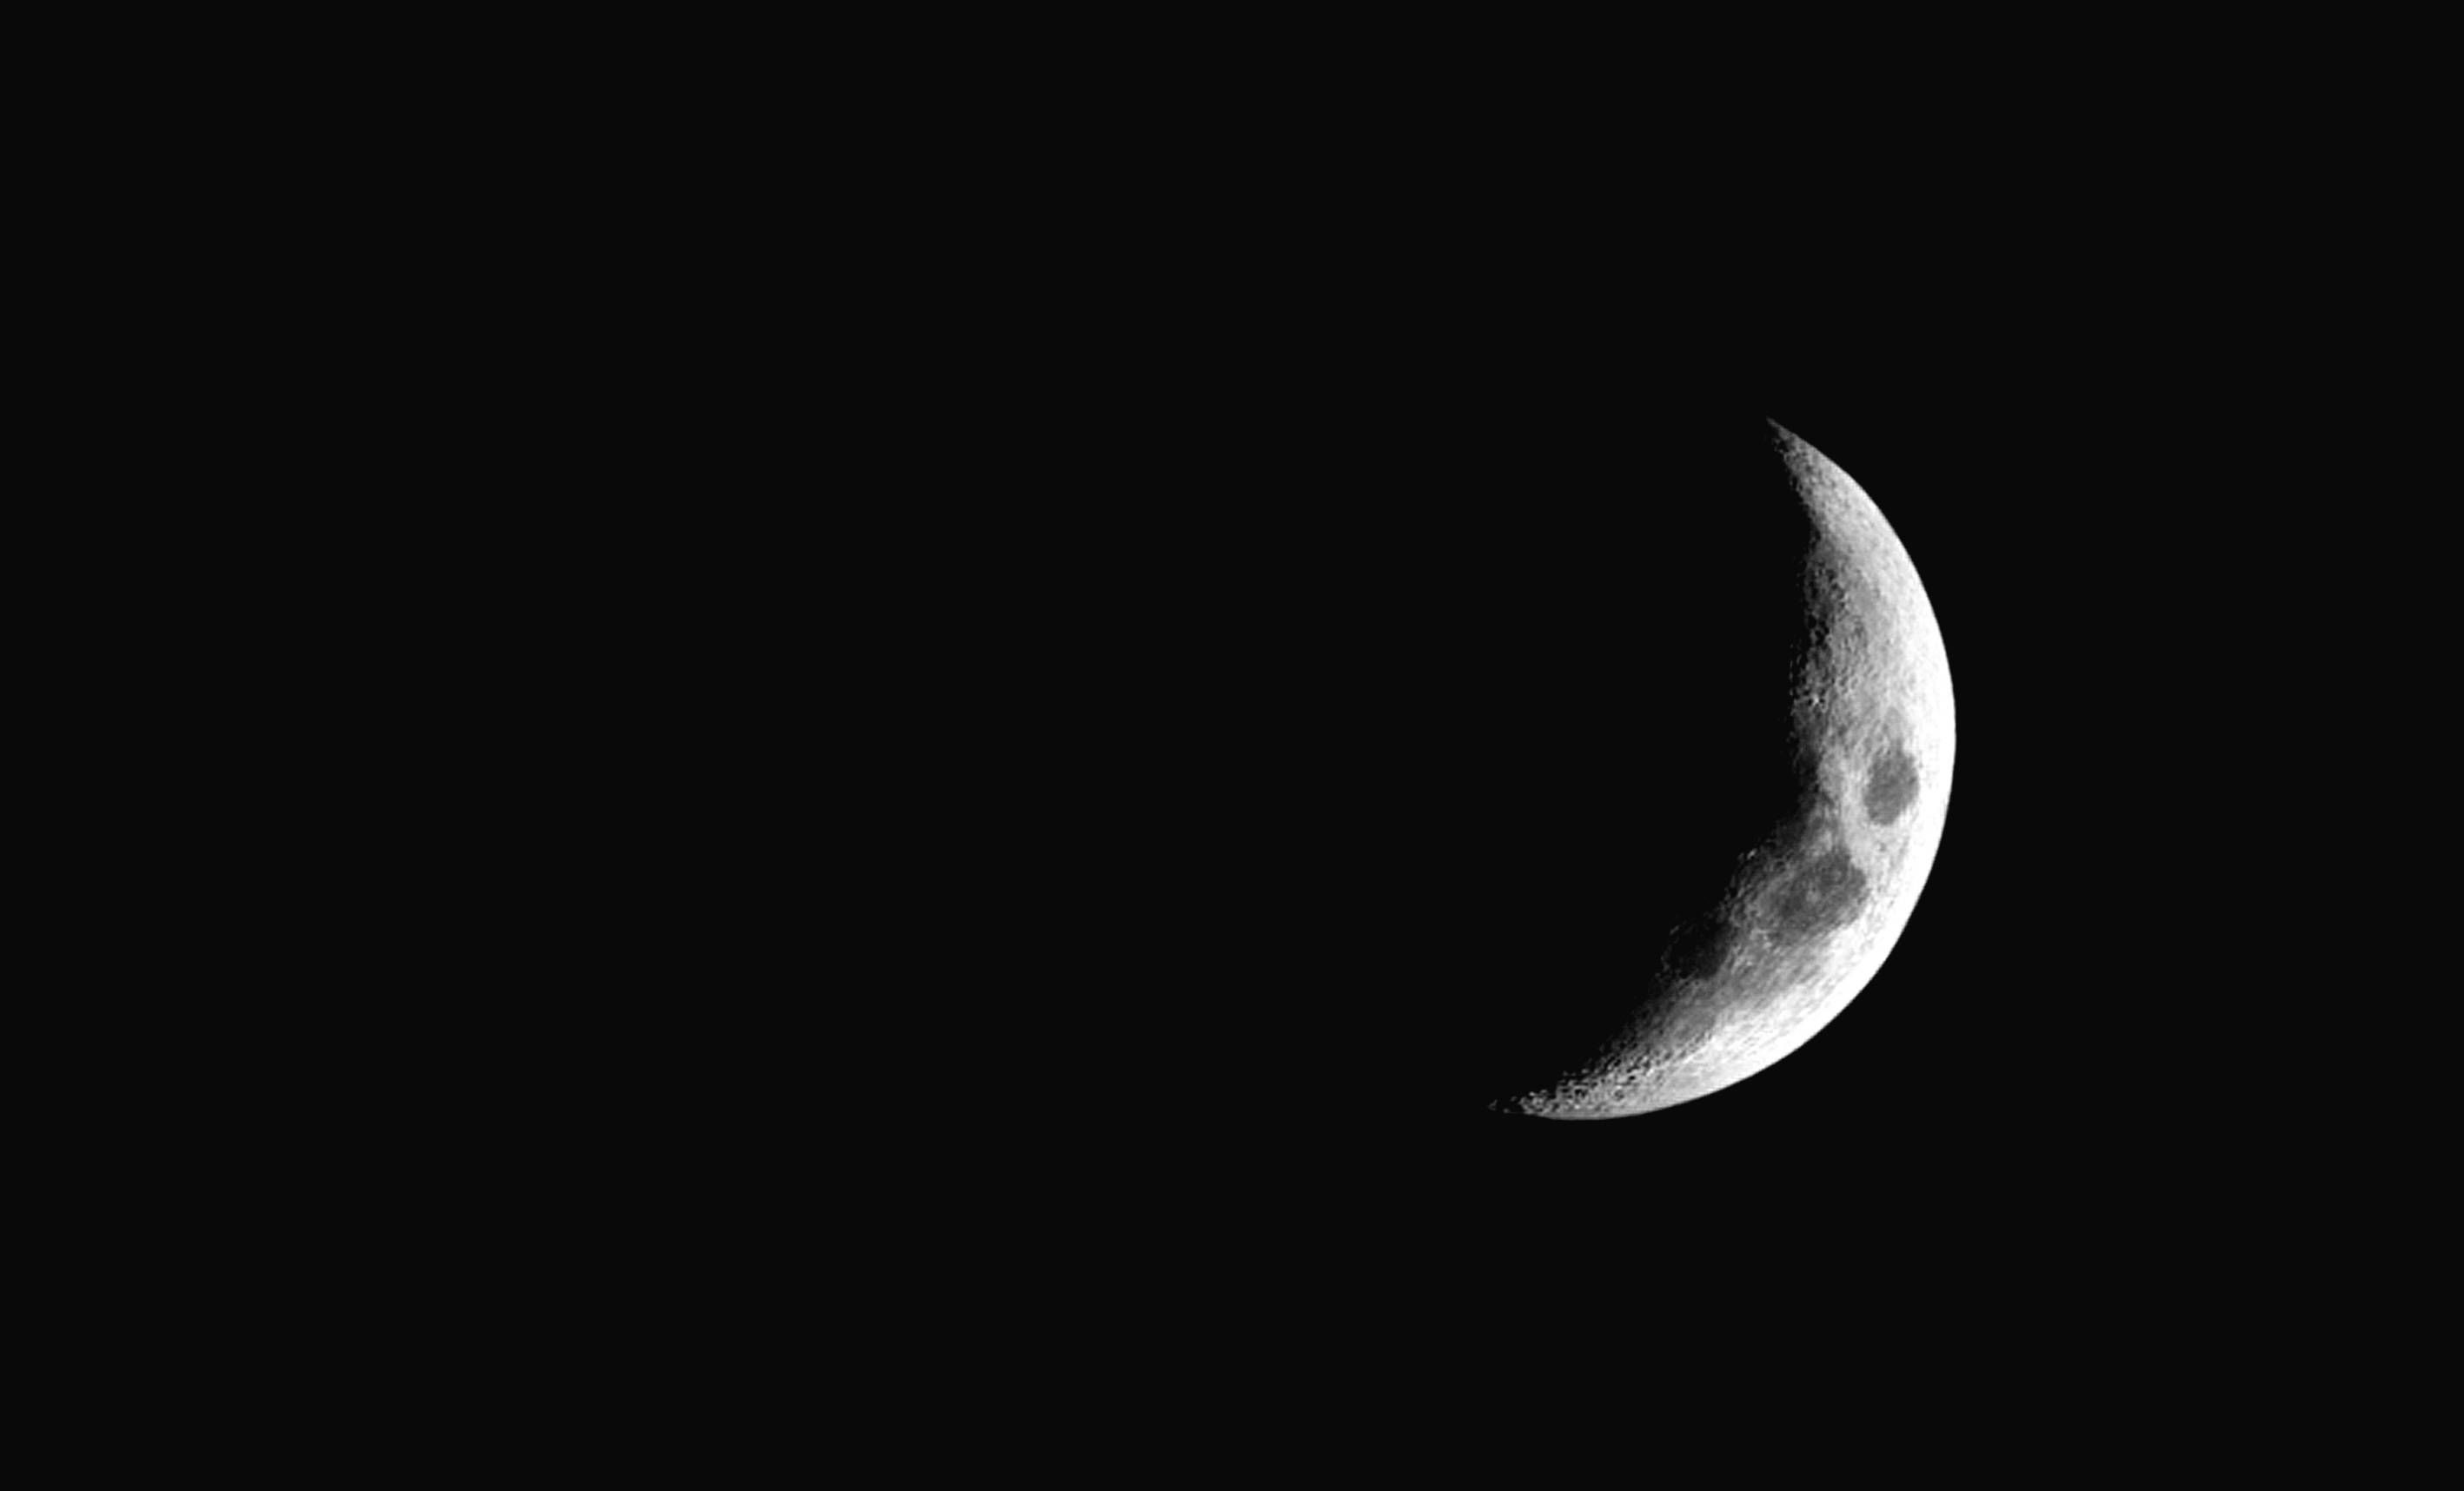 Amazing moon shot taken from s21fe - Samsung Members